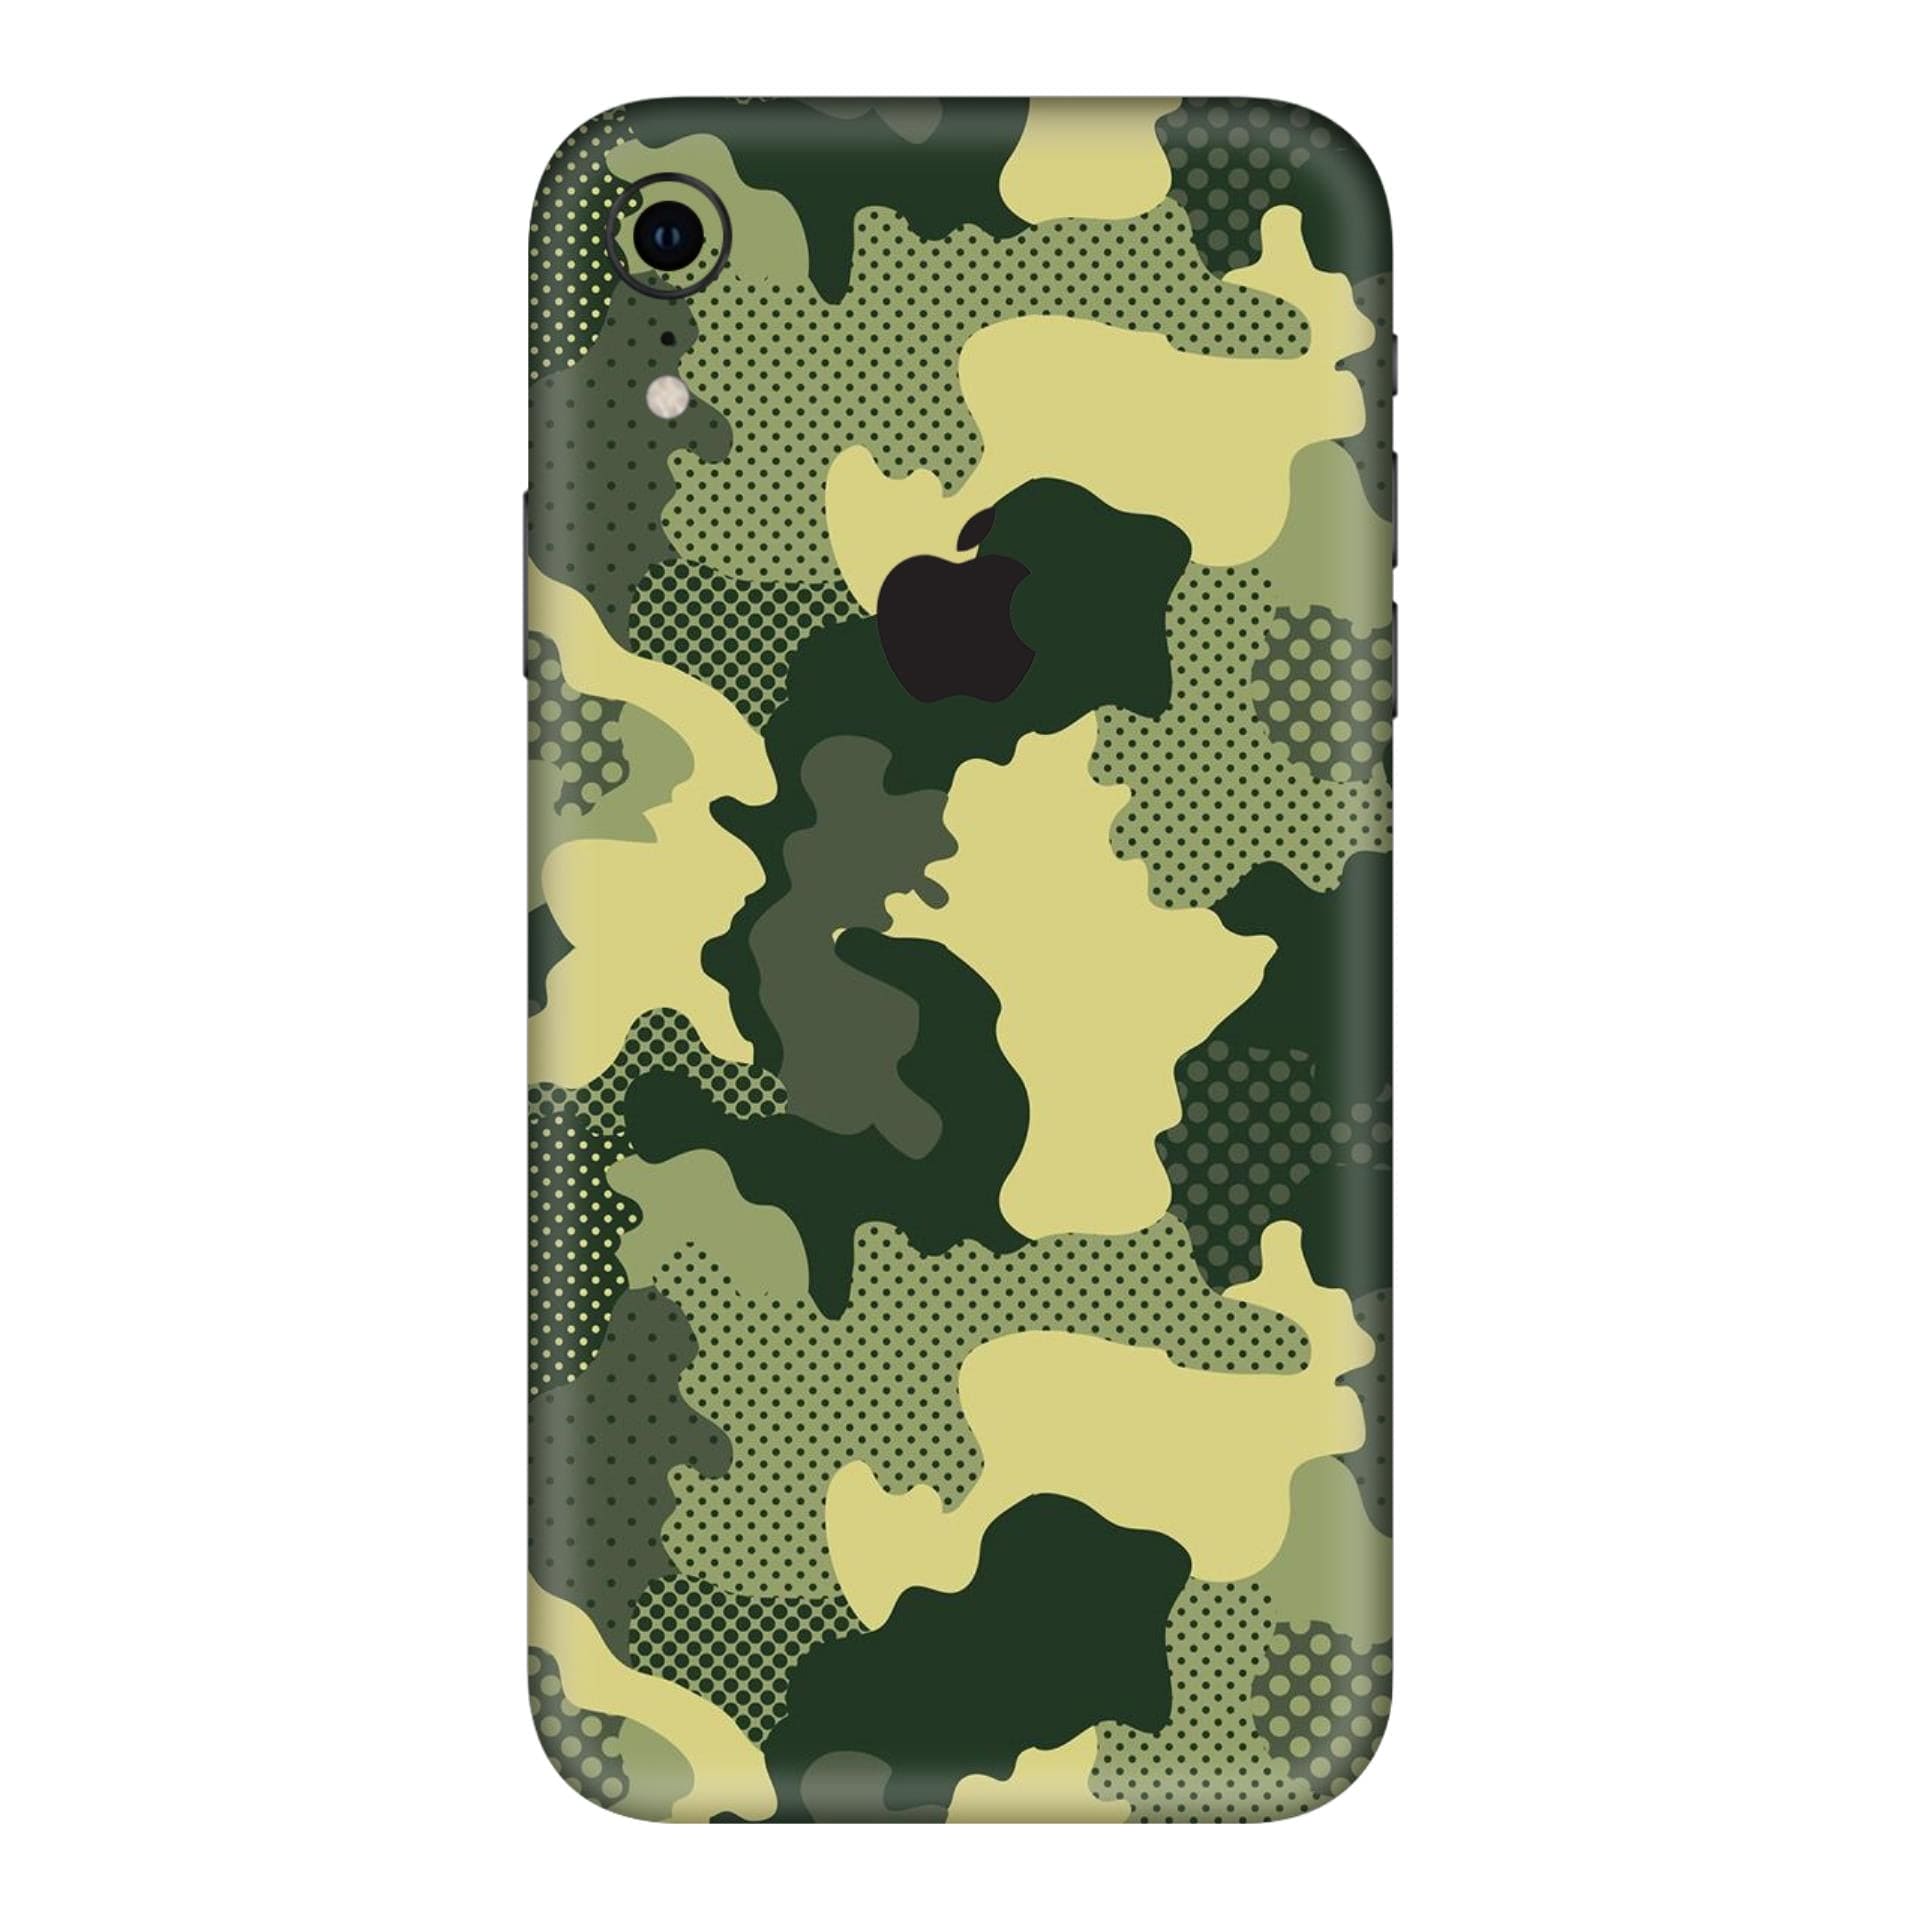 iphone XR Military Green Camo skins